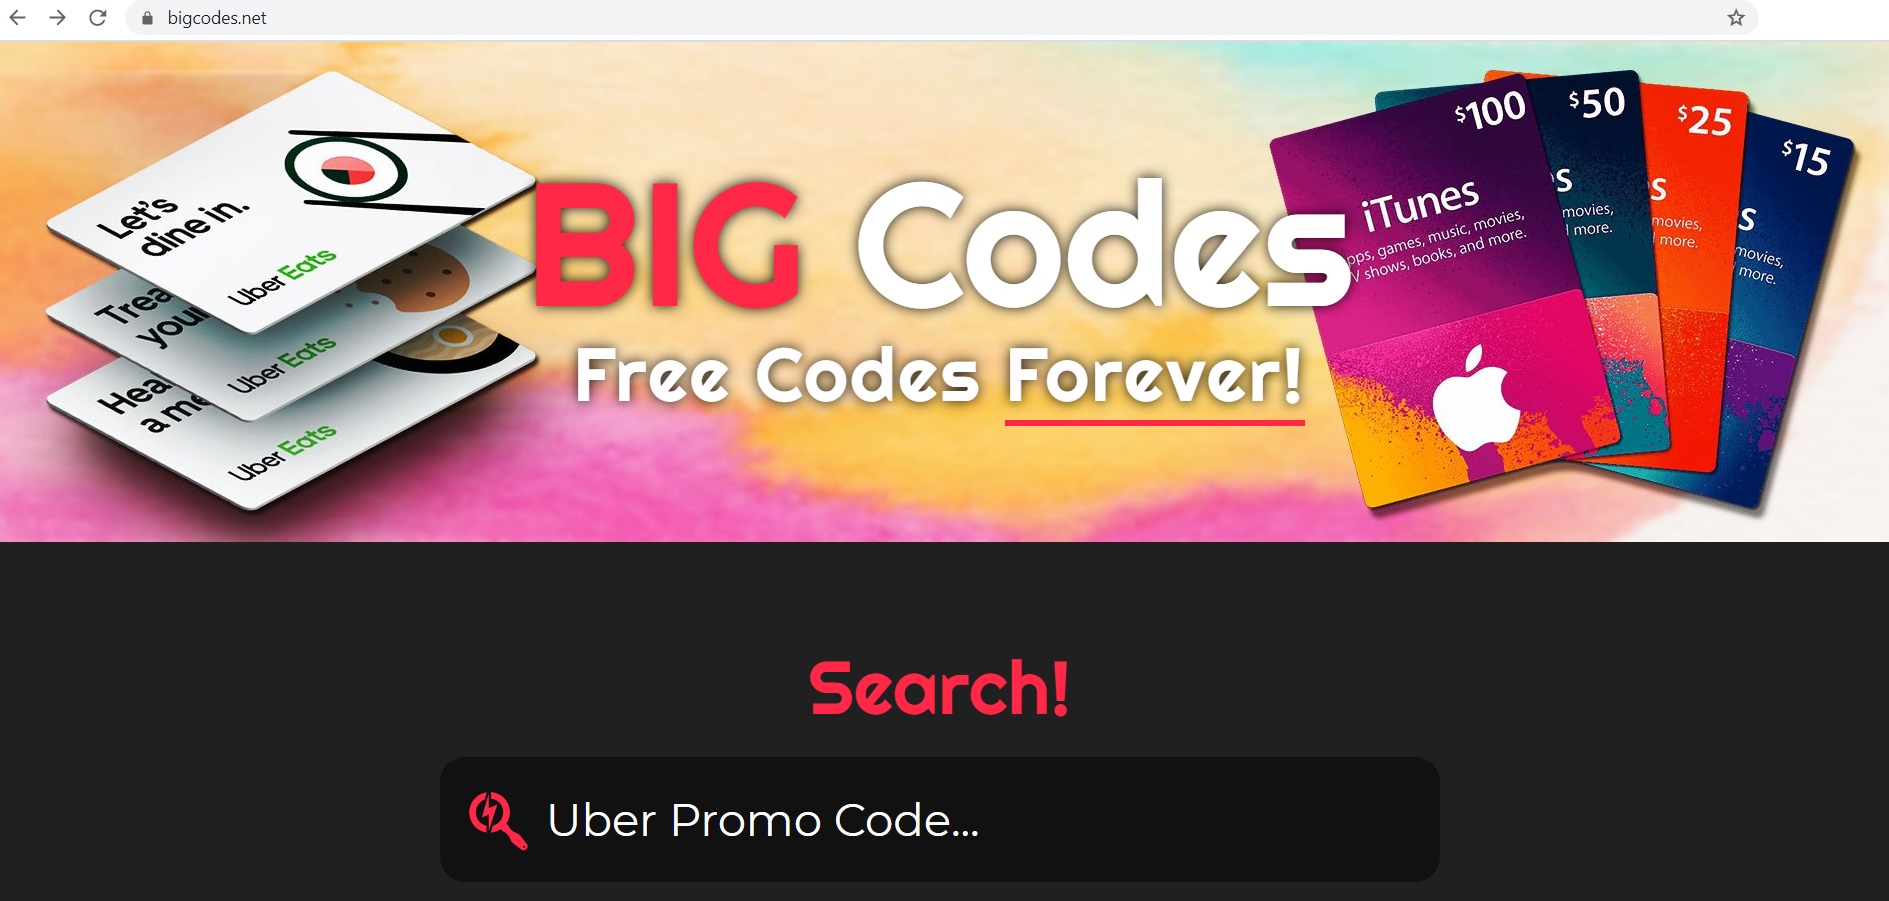 The Big Codes Website